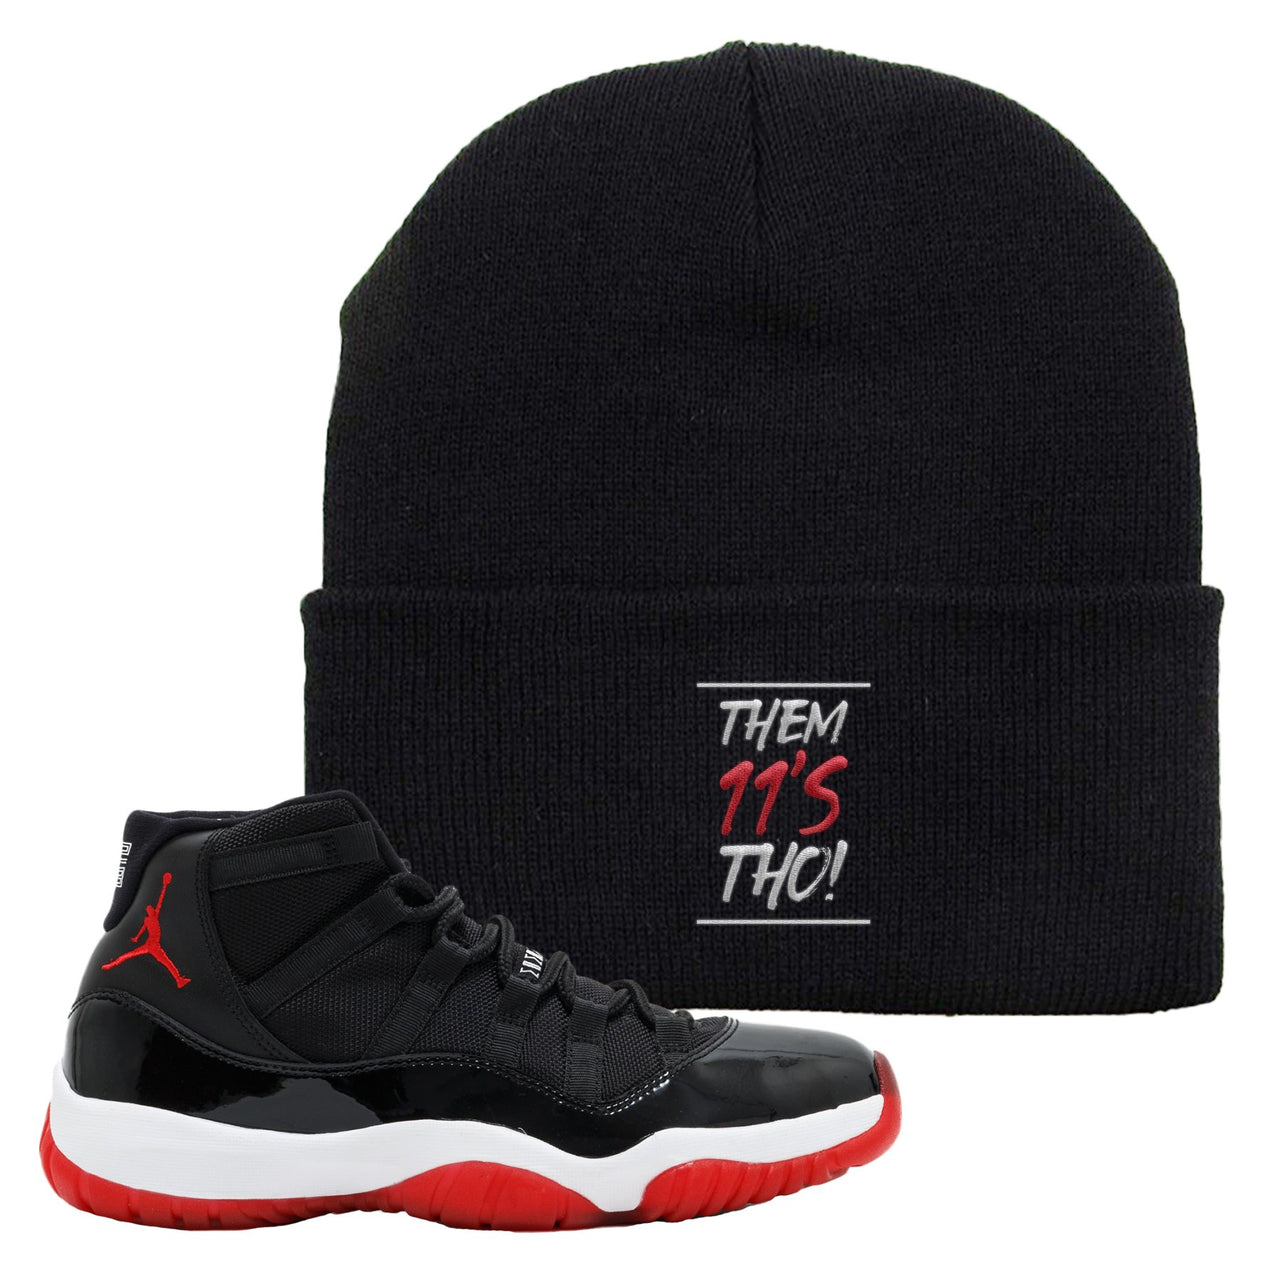 Jordan 11 Bred Them 11s Tho! Black Sneaker Hook Up Beanie